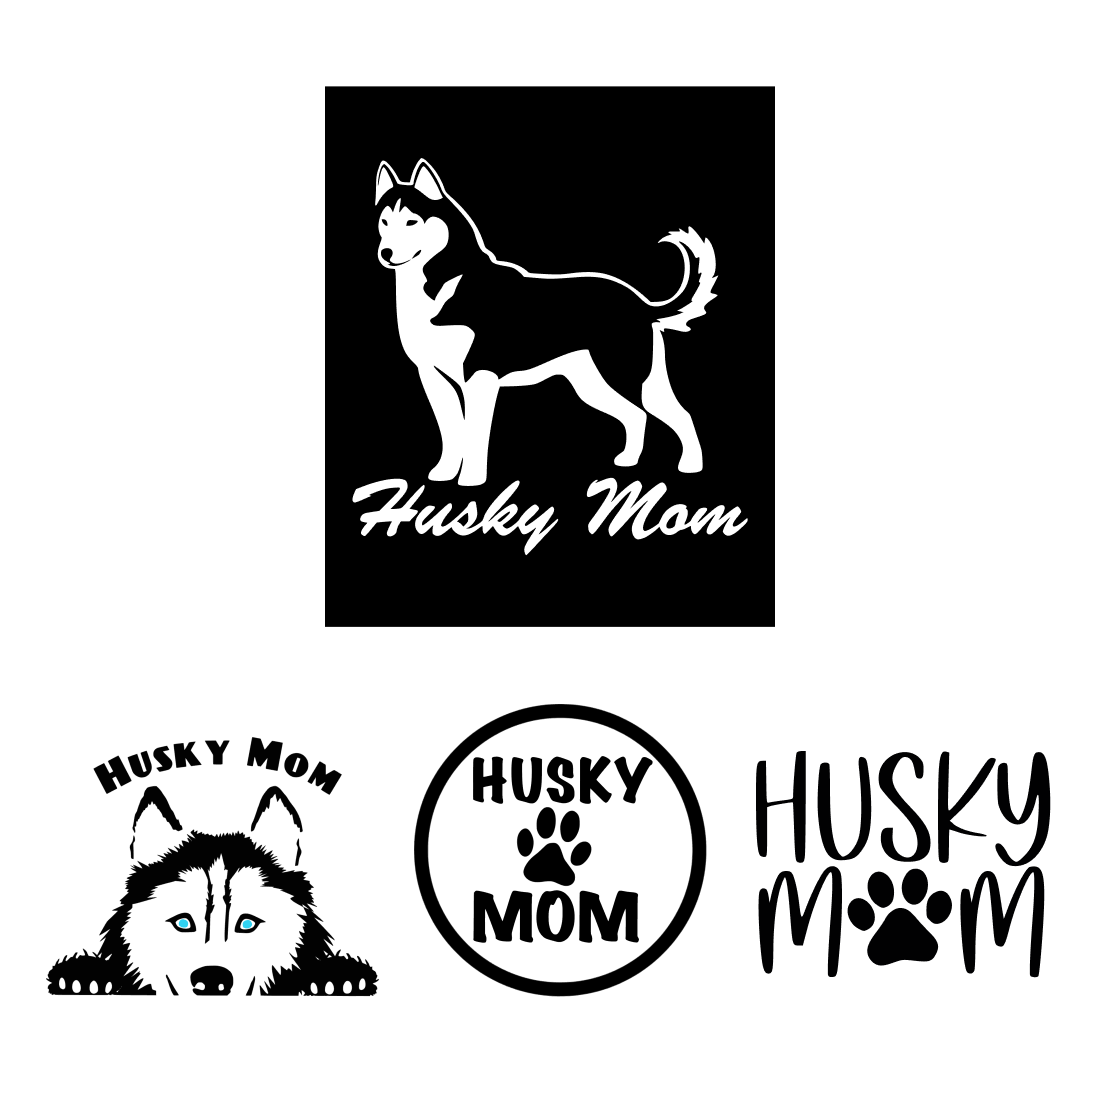 Husky mom and husky mom stickers on a white background.